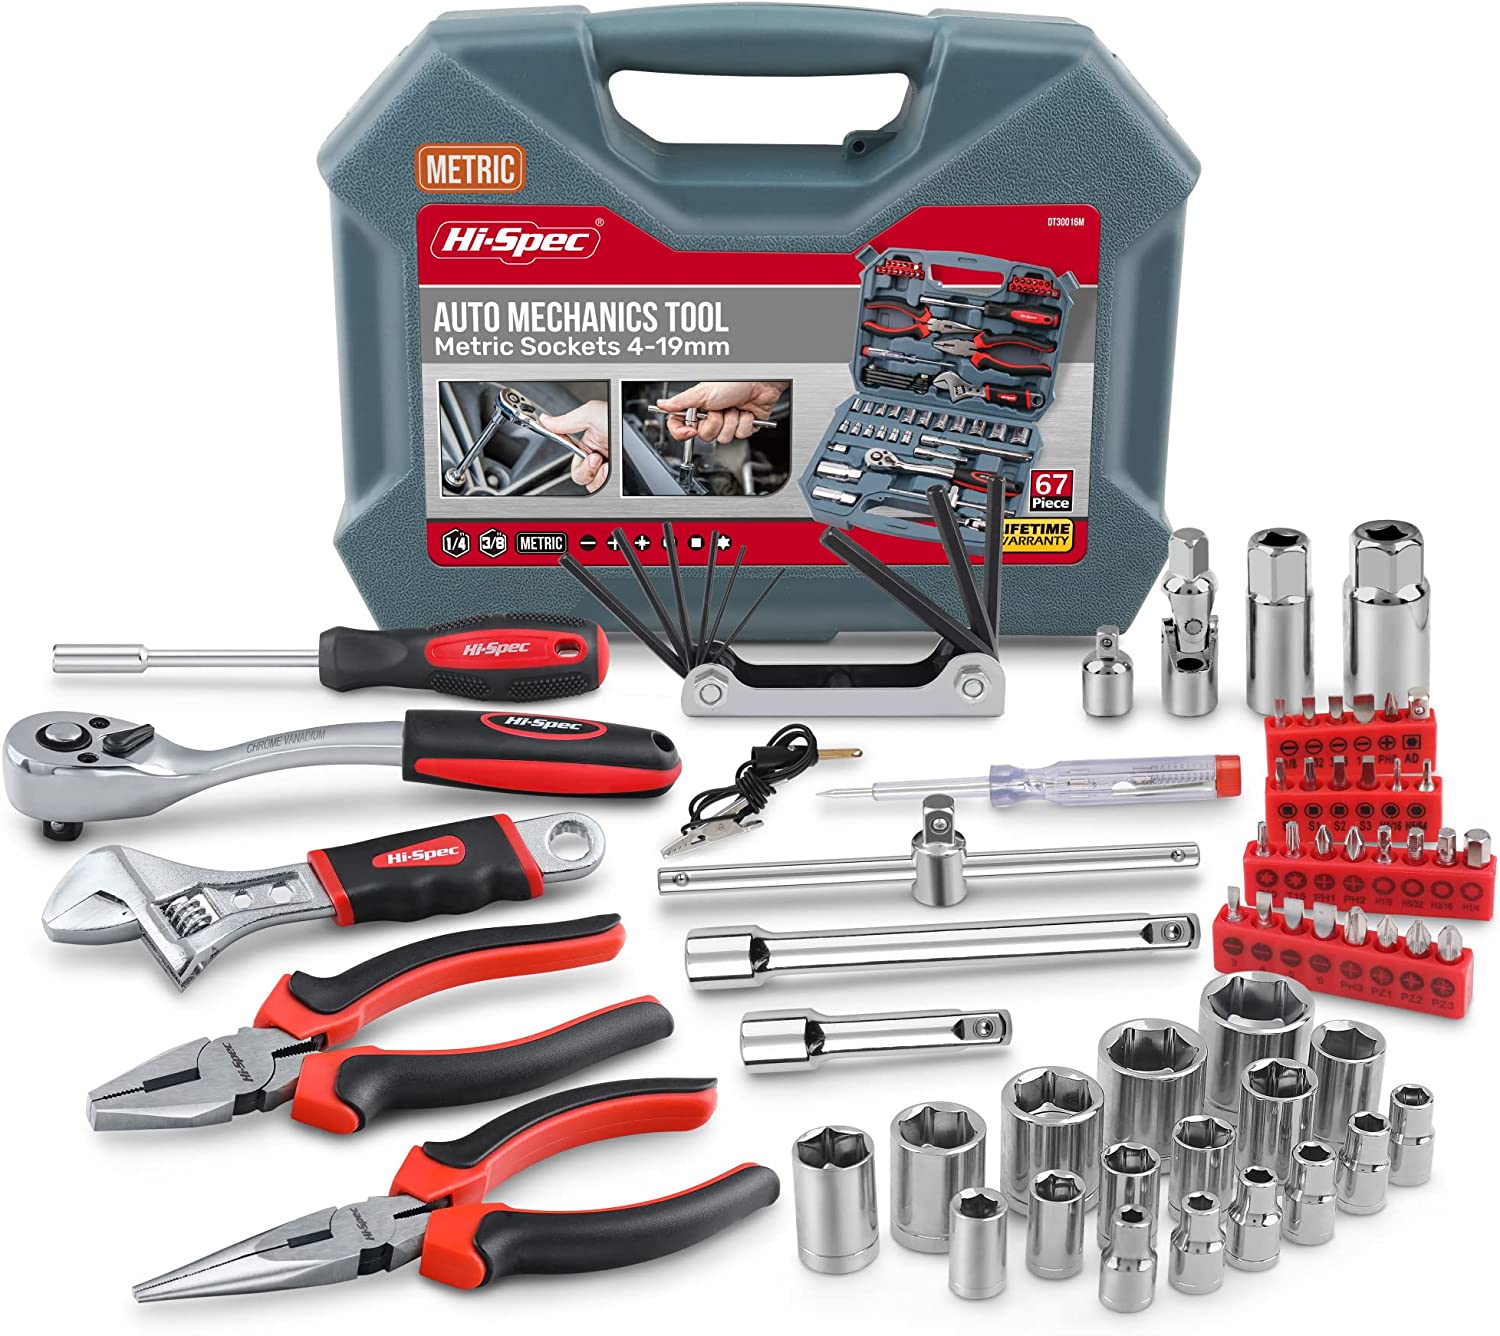 Hi-Spec Tools 67pc Auto Mechanics Hand Tool Kit